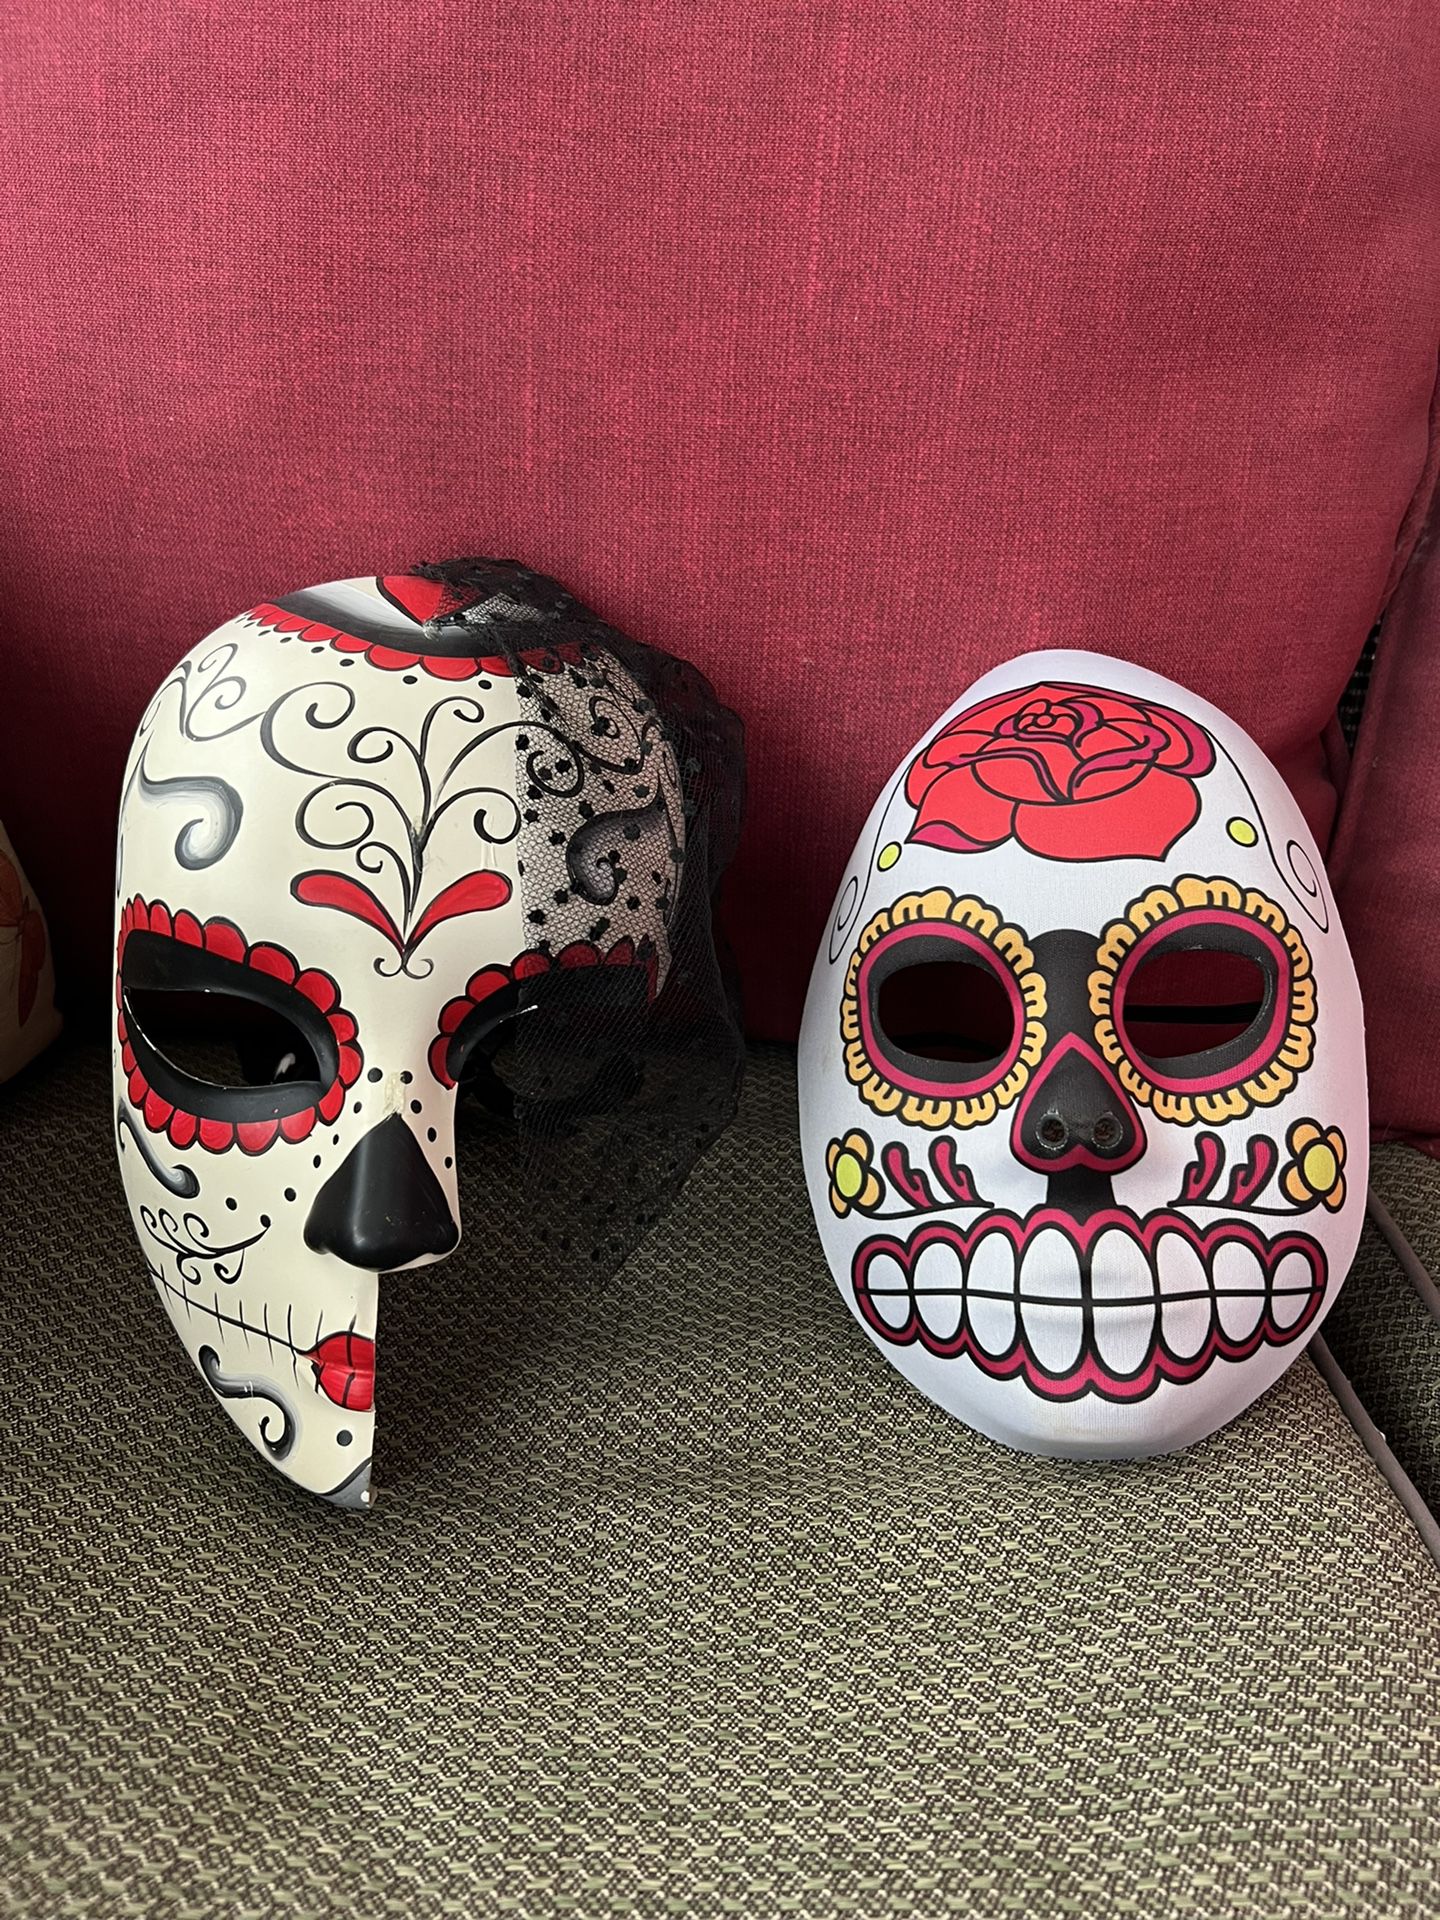  2 Catrina collection masks